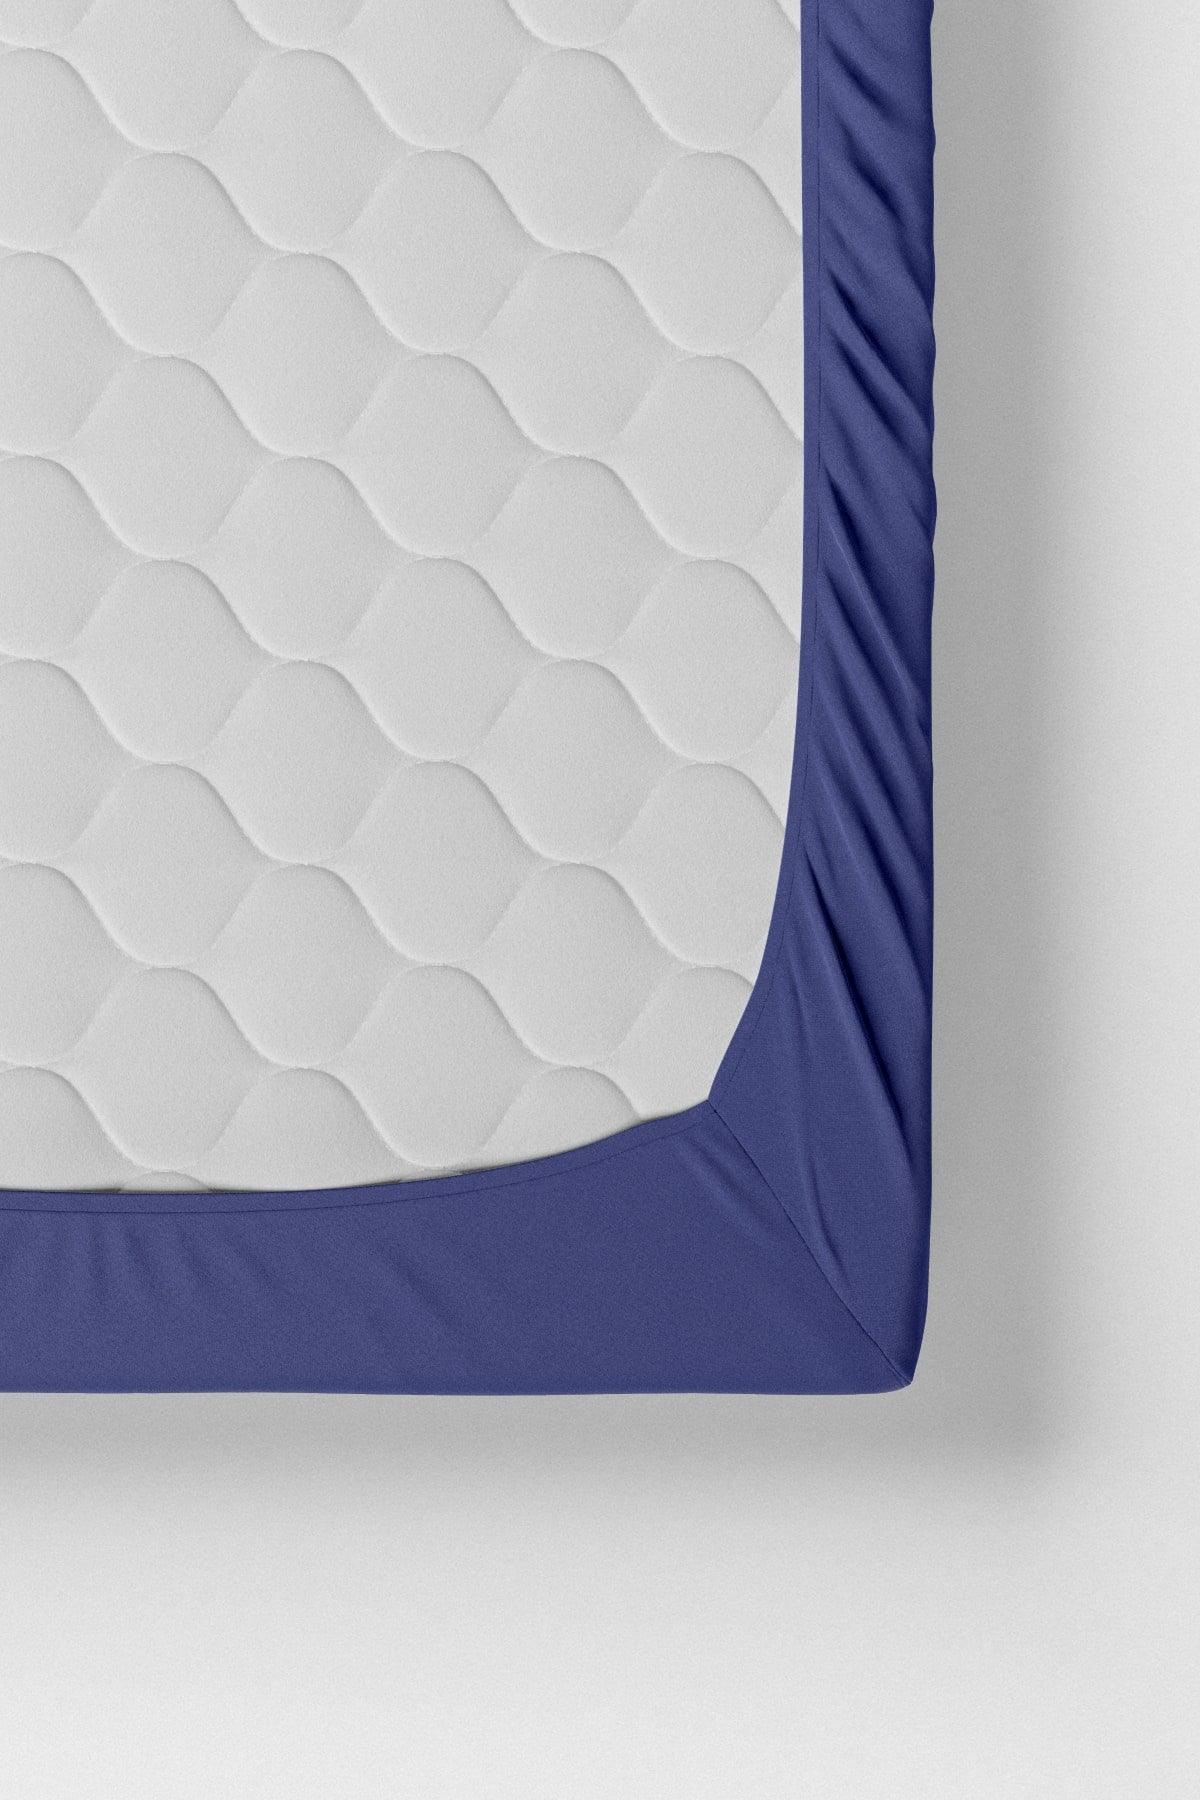 Double Cotton Elastic Bed Sheet - Lcvrt - Swordslife